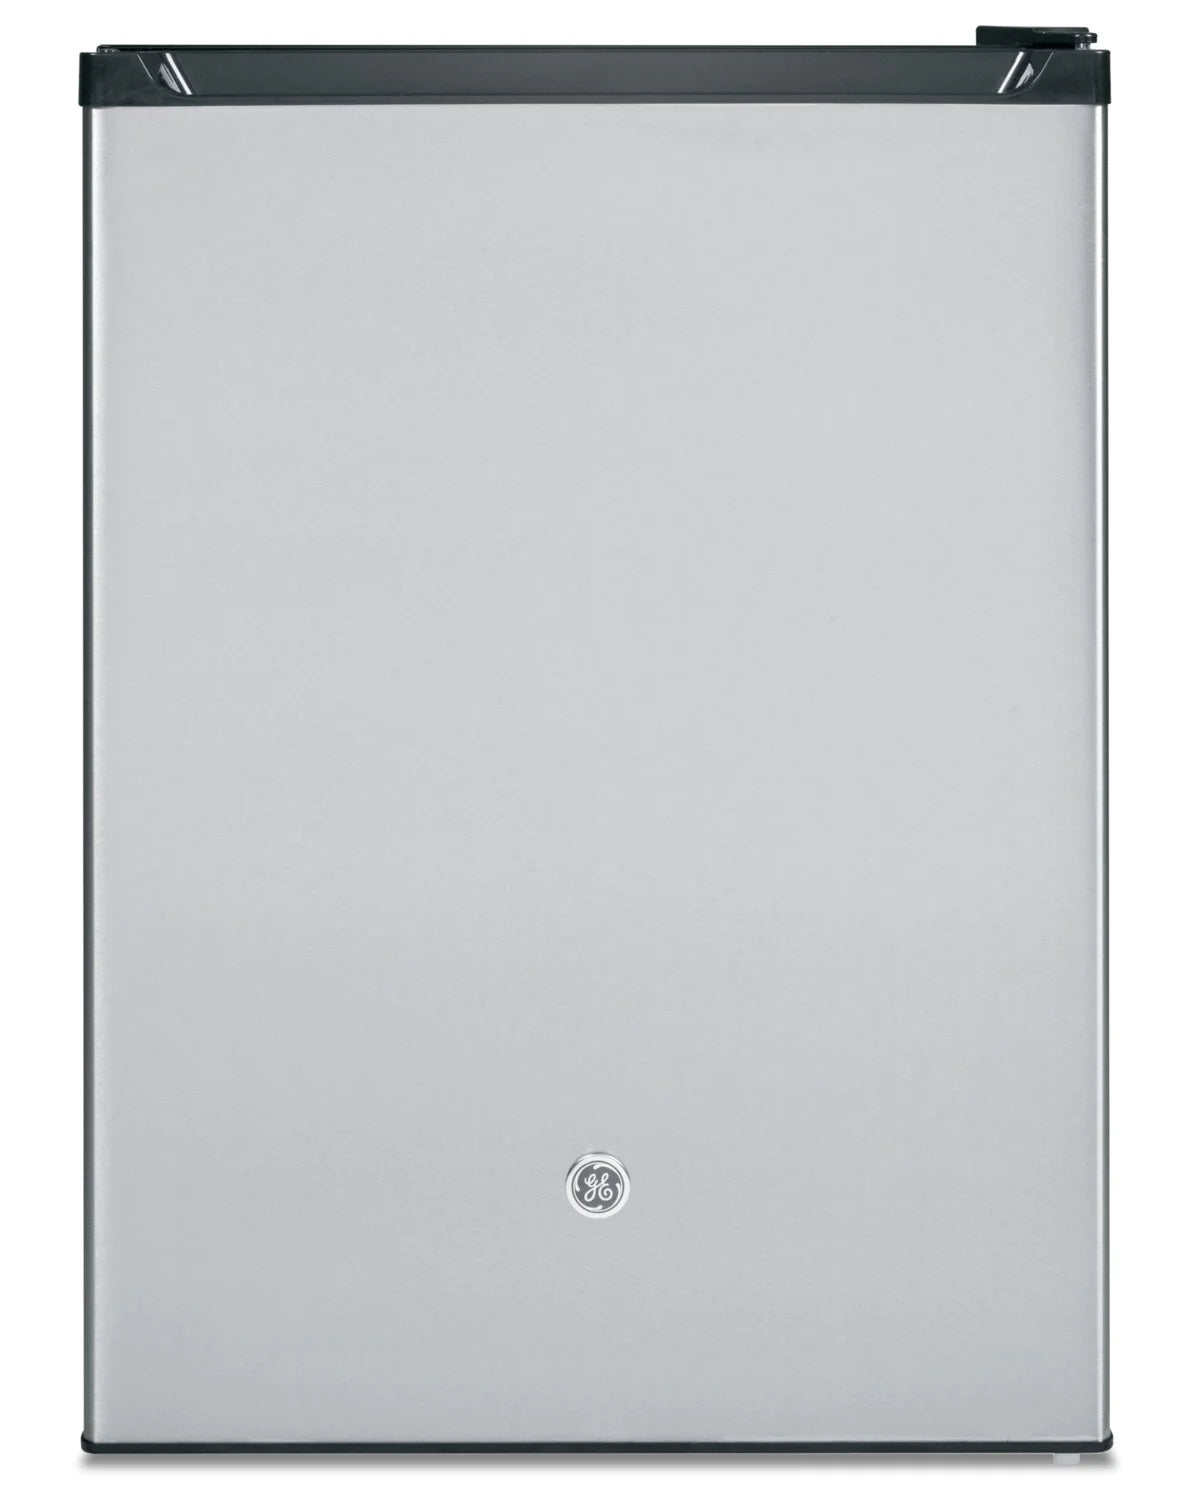 GE Refrigerator 24" Stainless Steel GCE06GSHSB